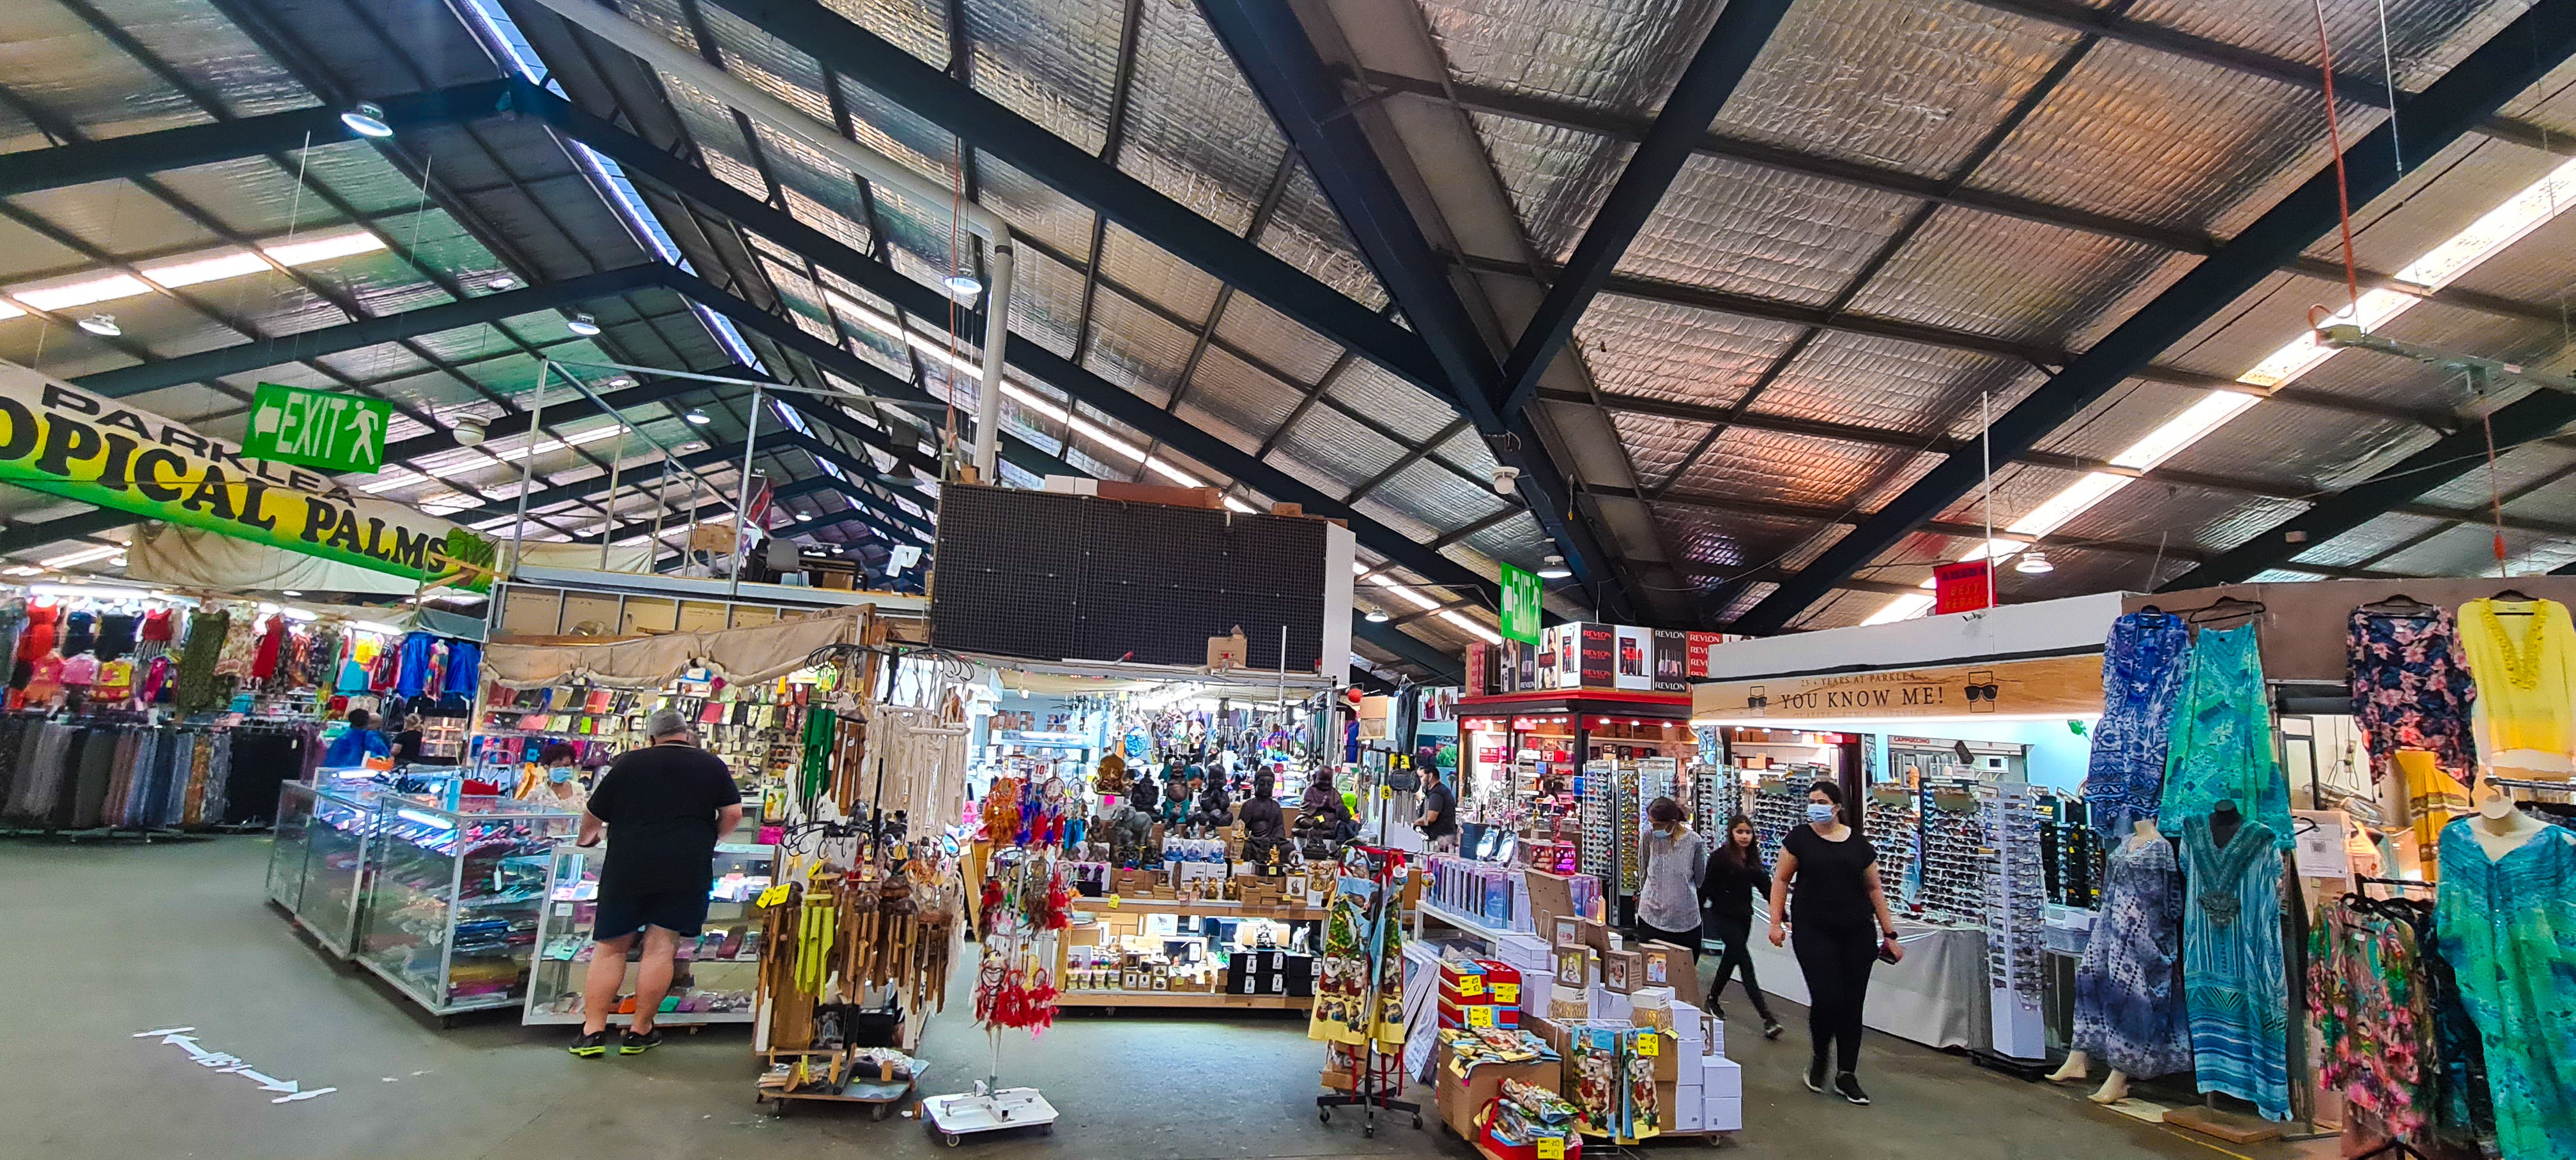 Parklea Market